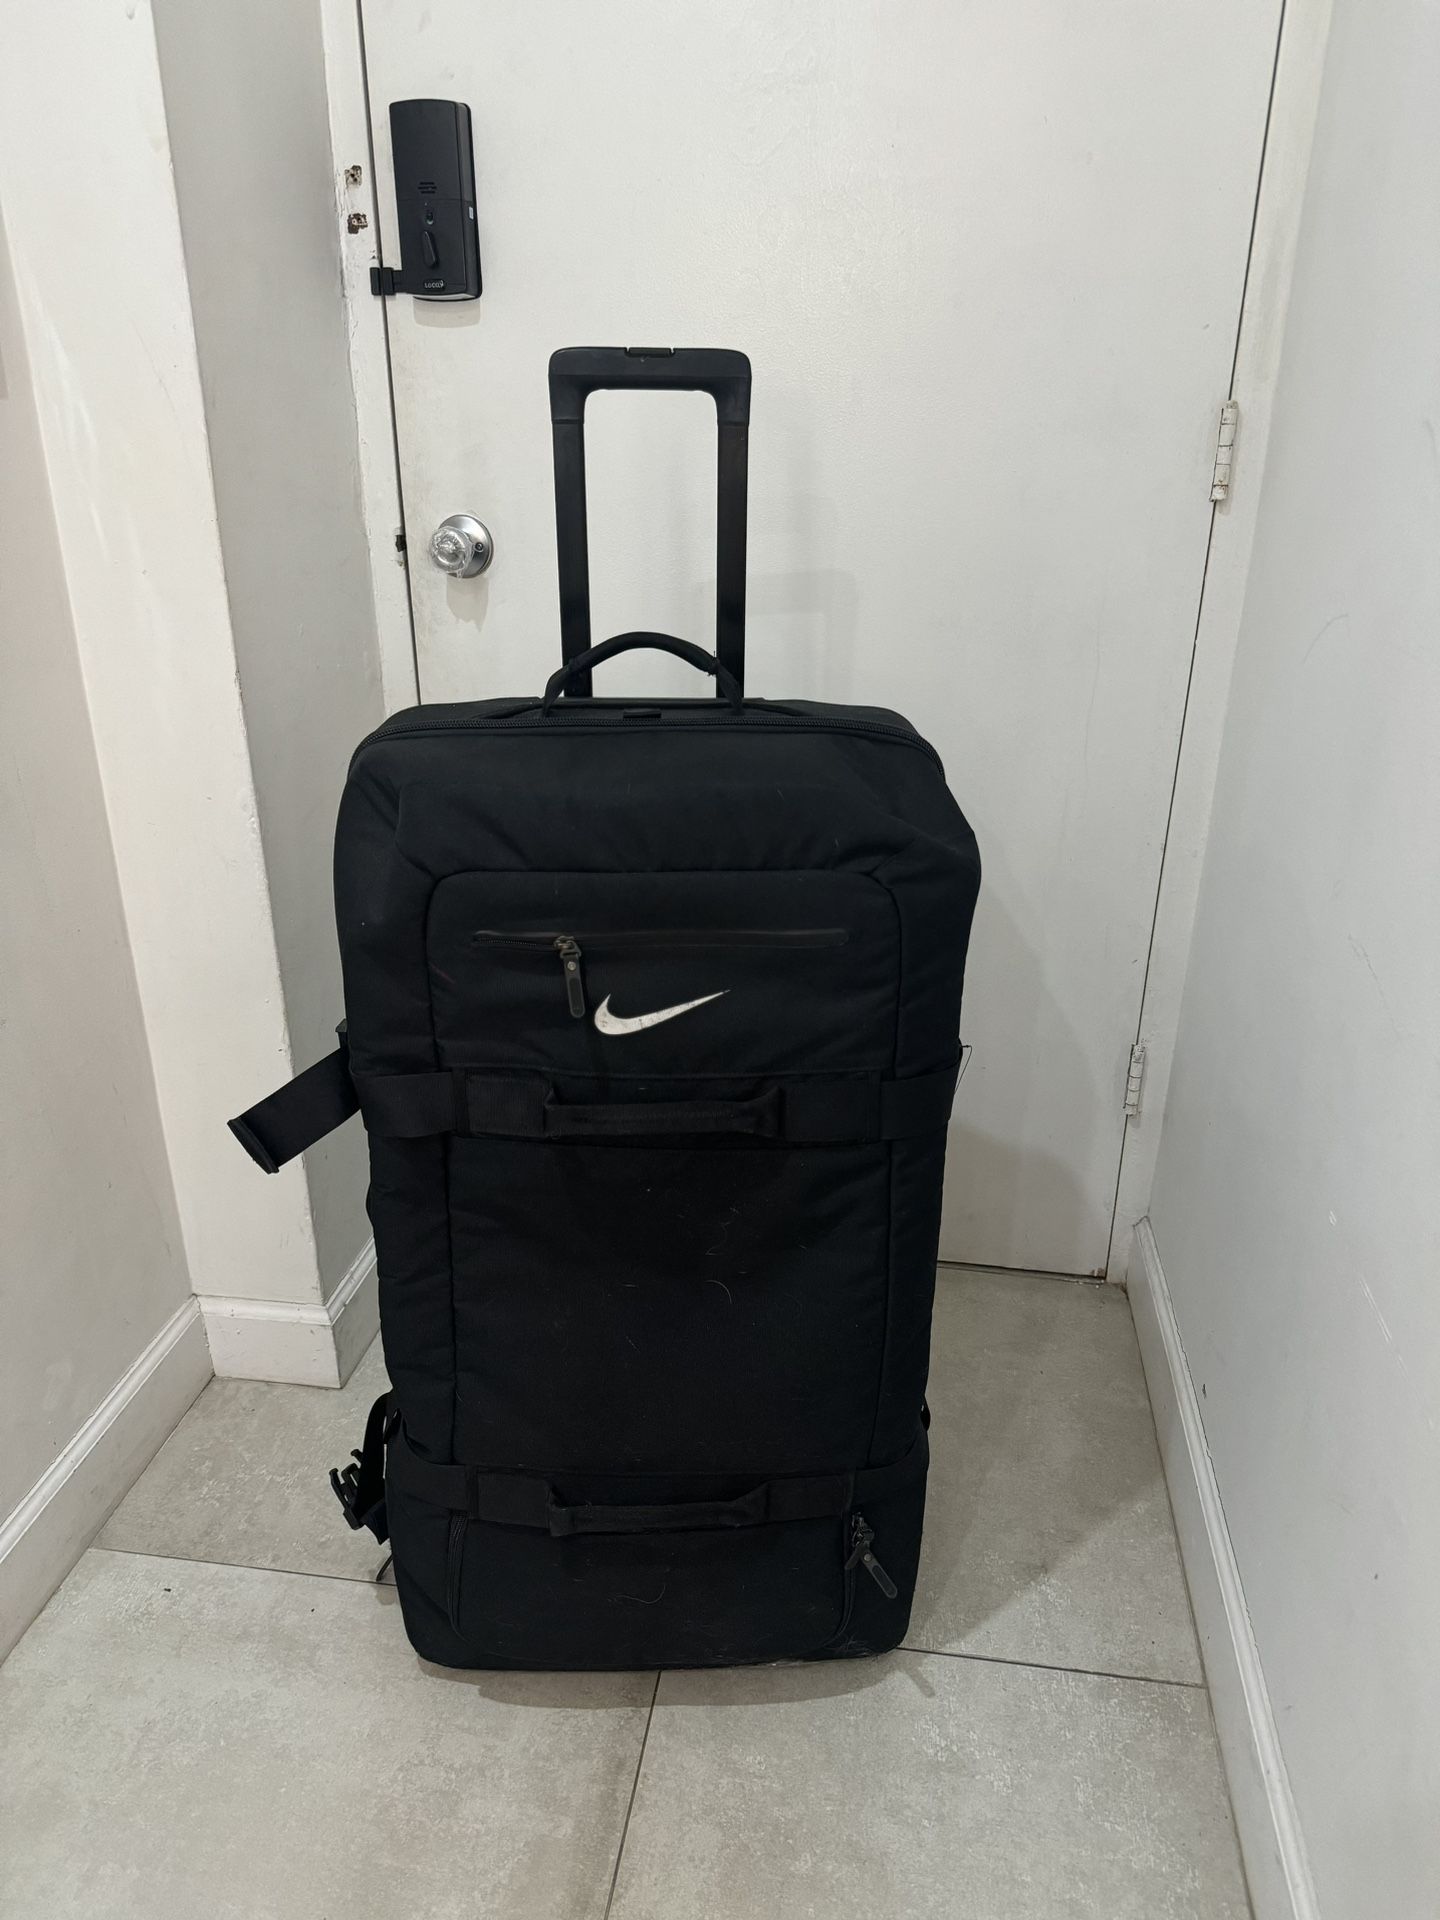 Nike Roller Cabin Bag Suitcase Travel Wheels